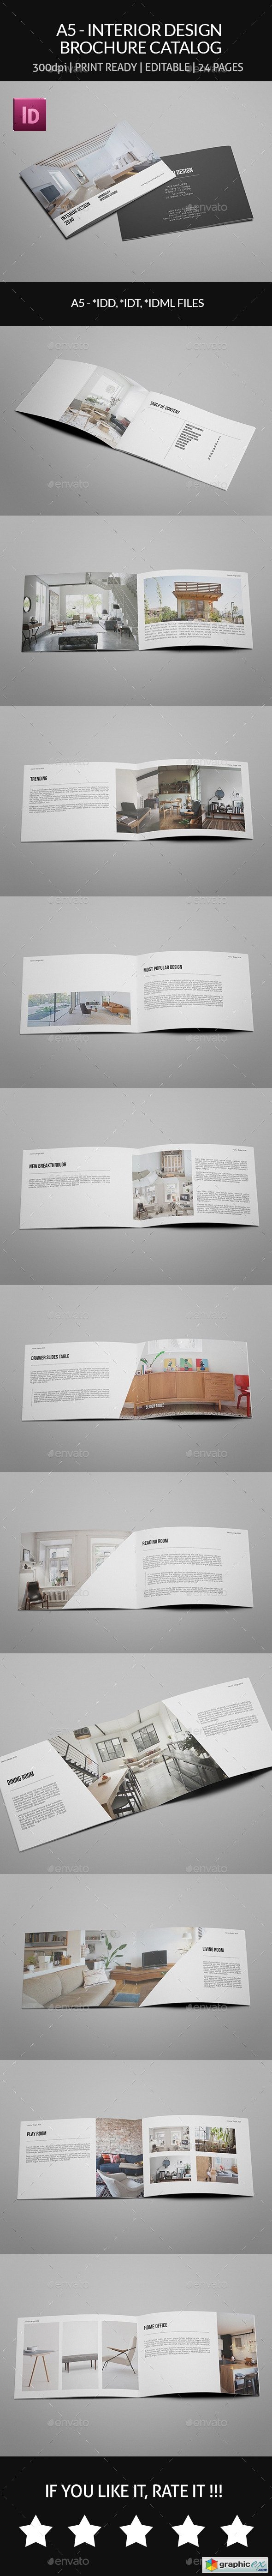 A5 - Interior Design Brochure Catalog